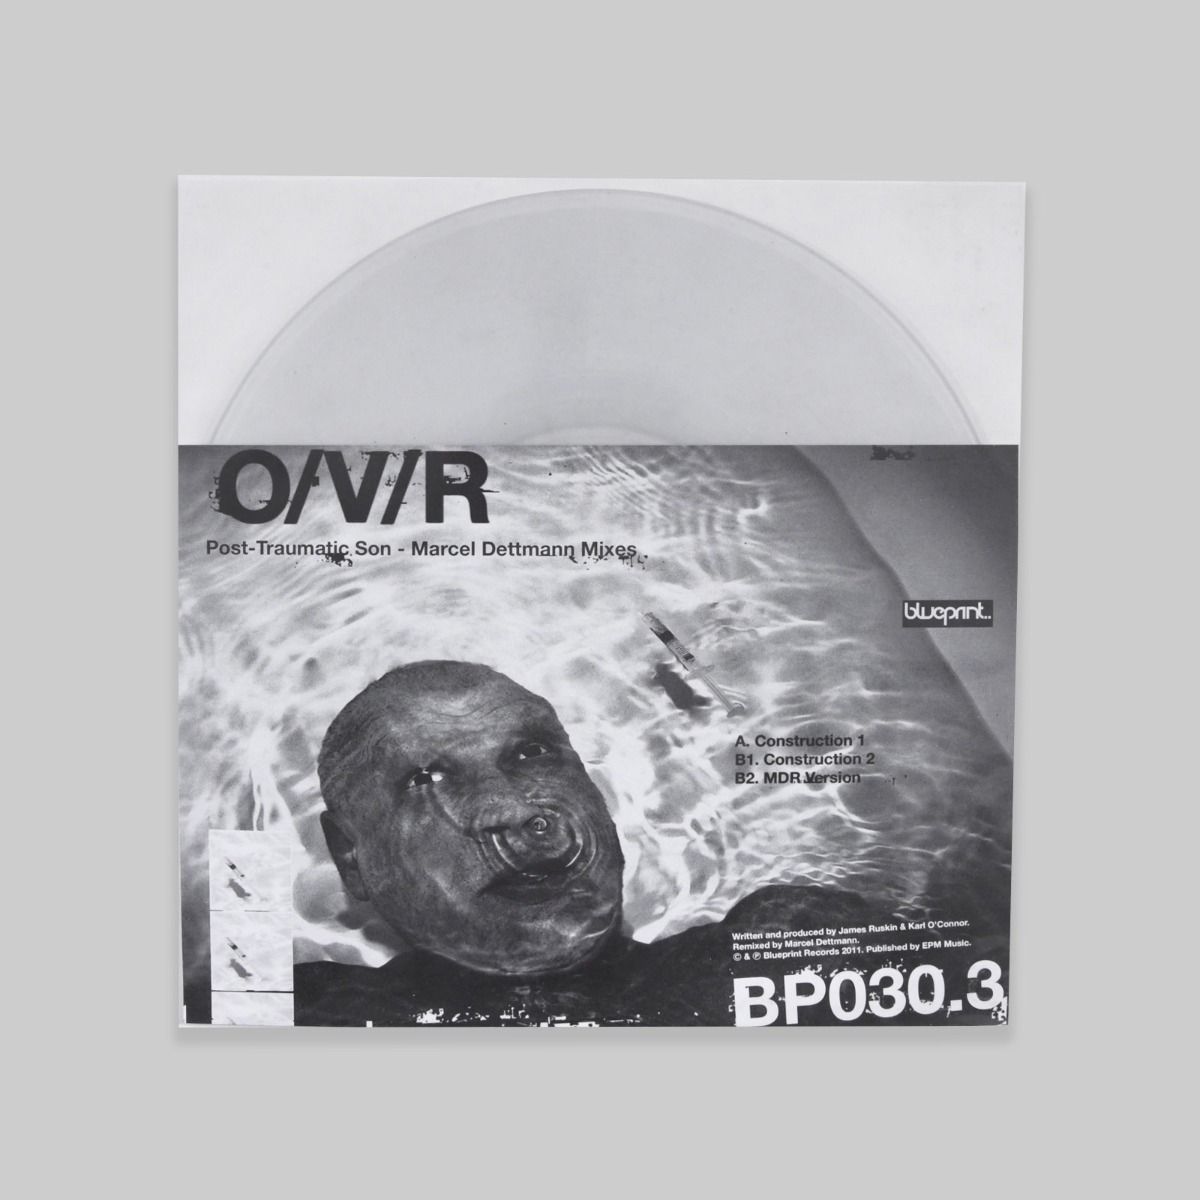 O/V/R – Post-Traumatic Son (Marcel Dettmann Mixes) 12" (Clear Vinyl)